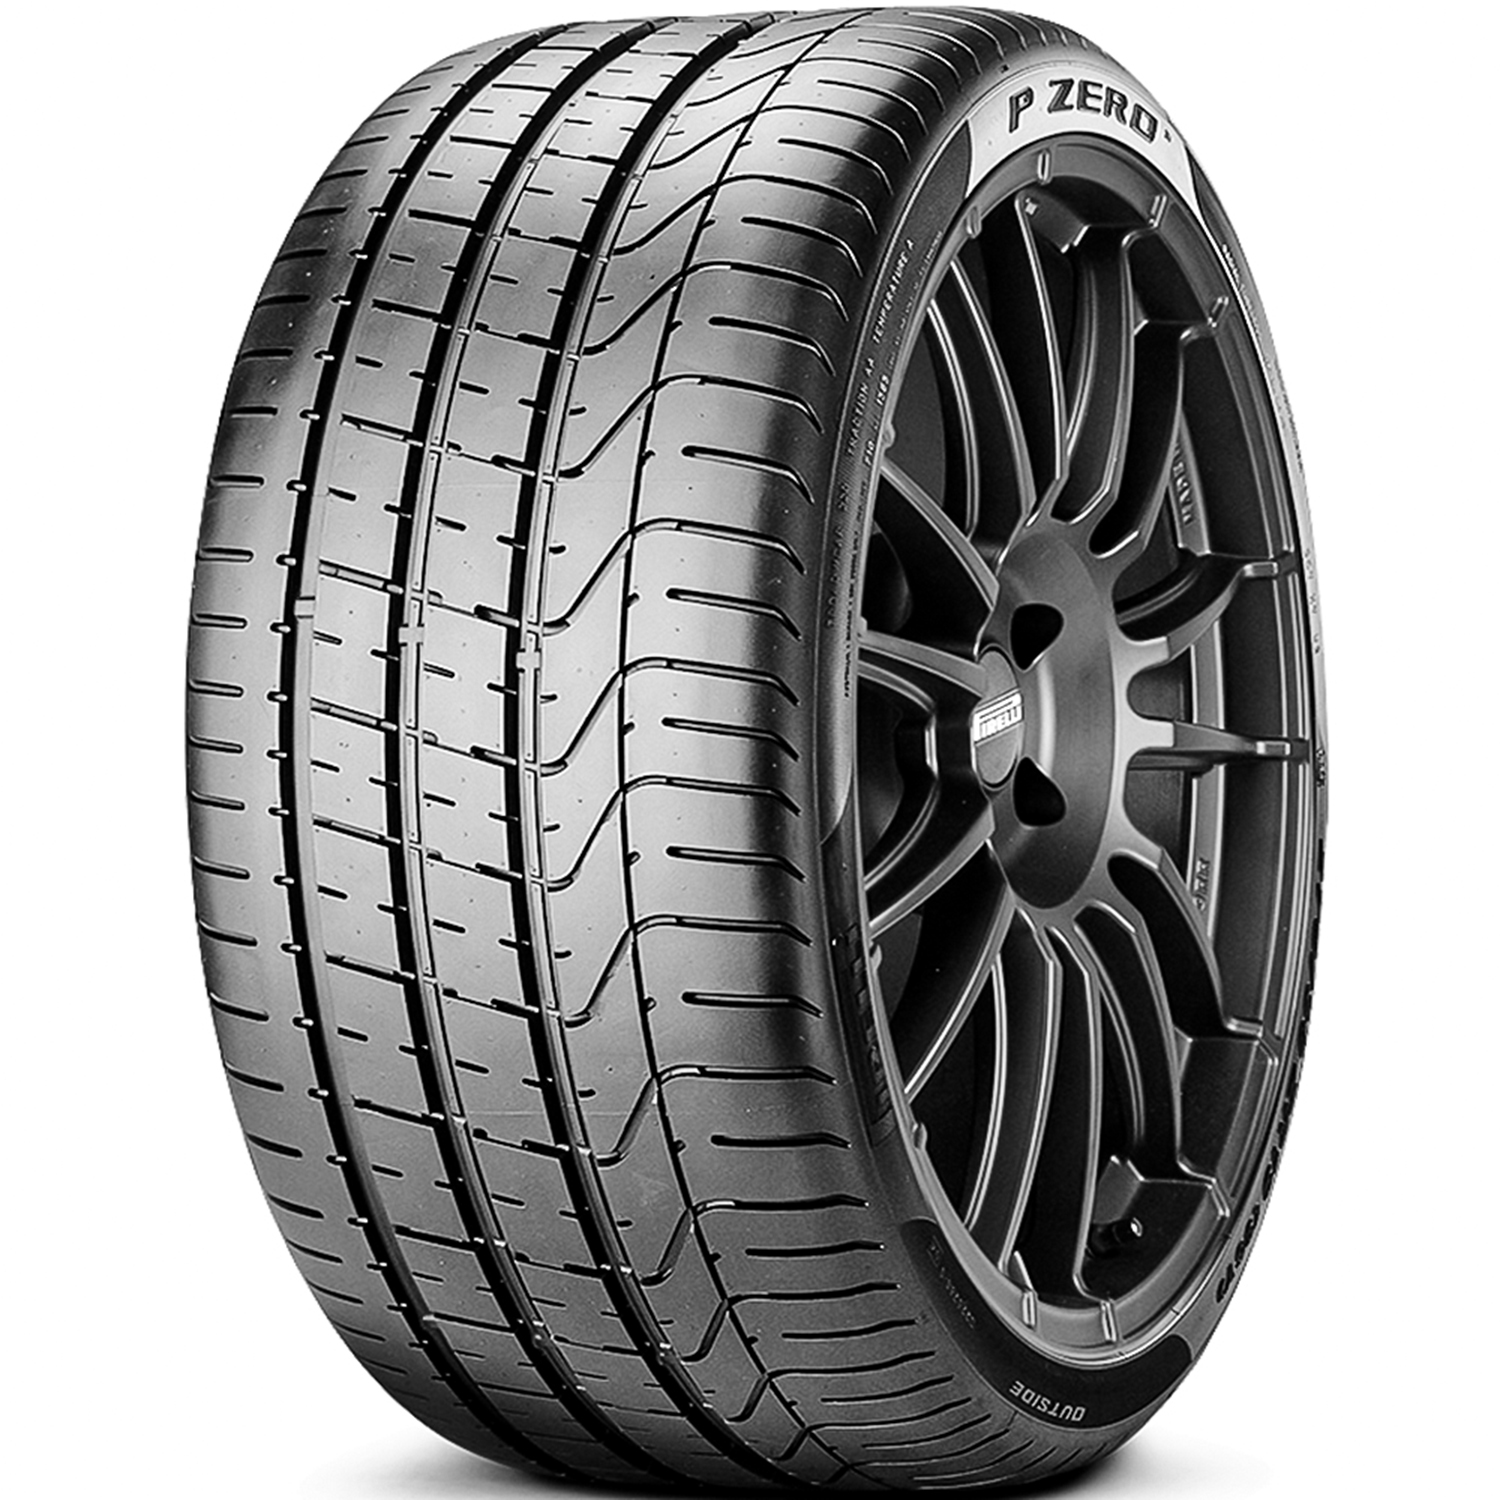 Pirelli P Zero Run Flat 205/45R17 84V High Performance Tire Fits: 2017-18 Hyundai Accent GLS, 2012-15 Kia Rio SX - image 1 of 7